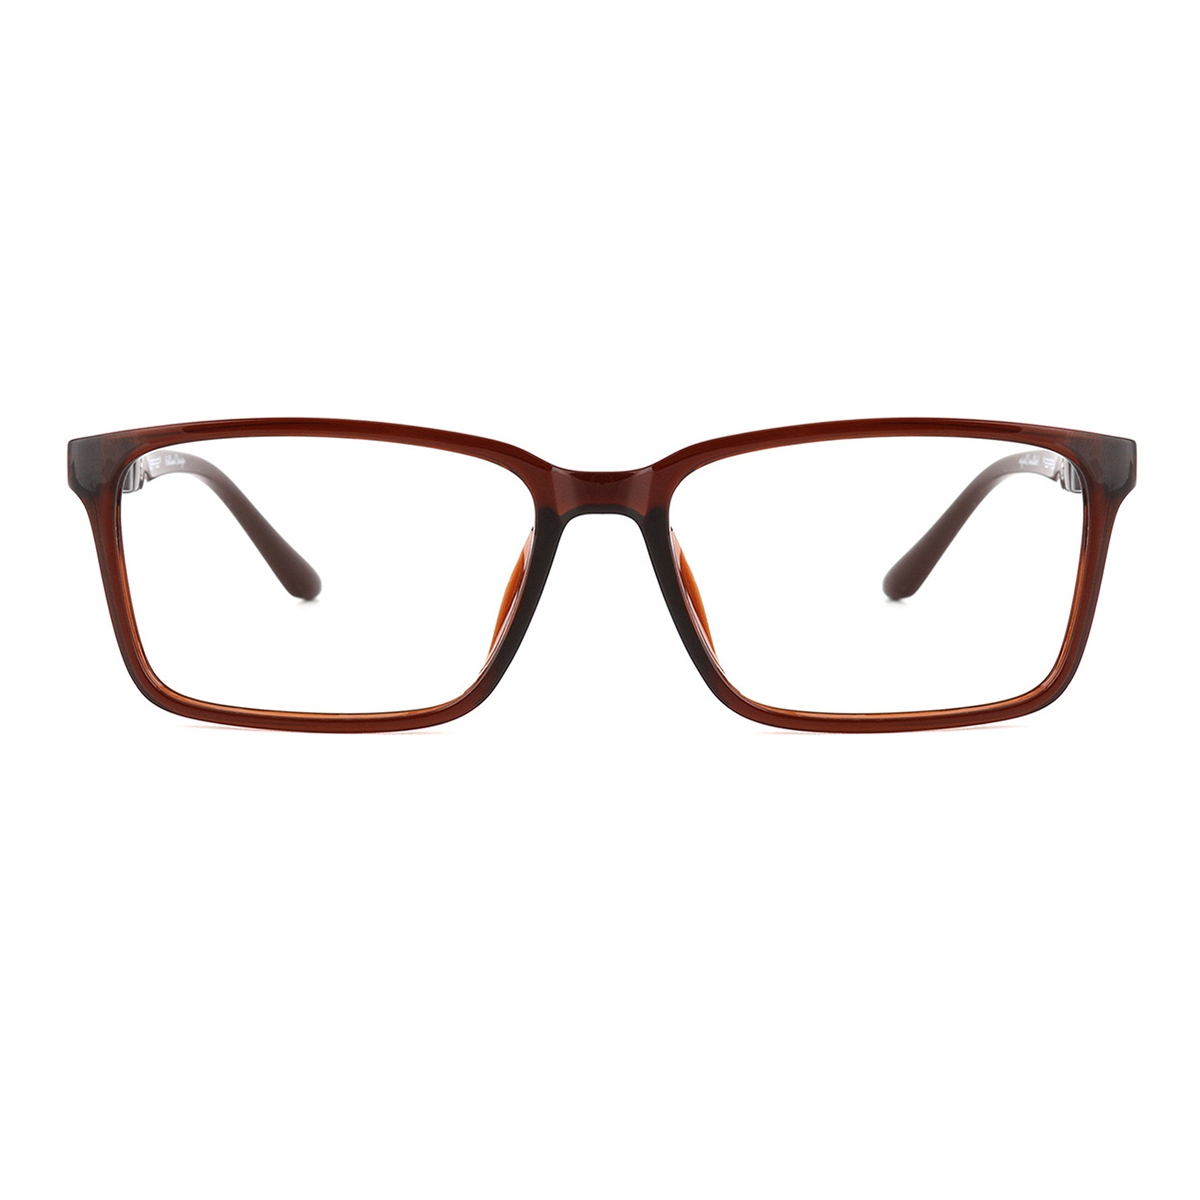 rectangle black eyeglasses